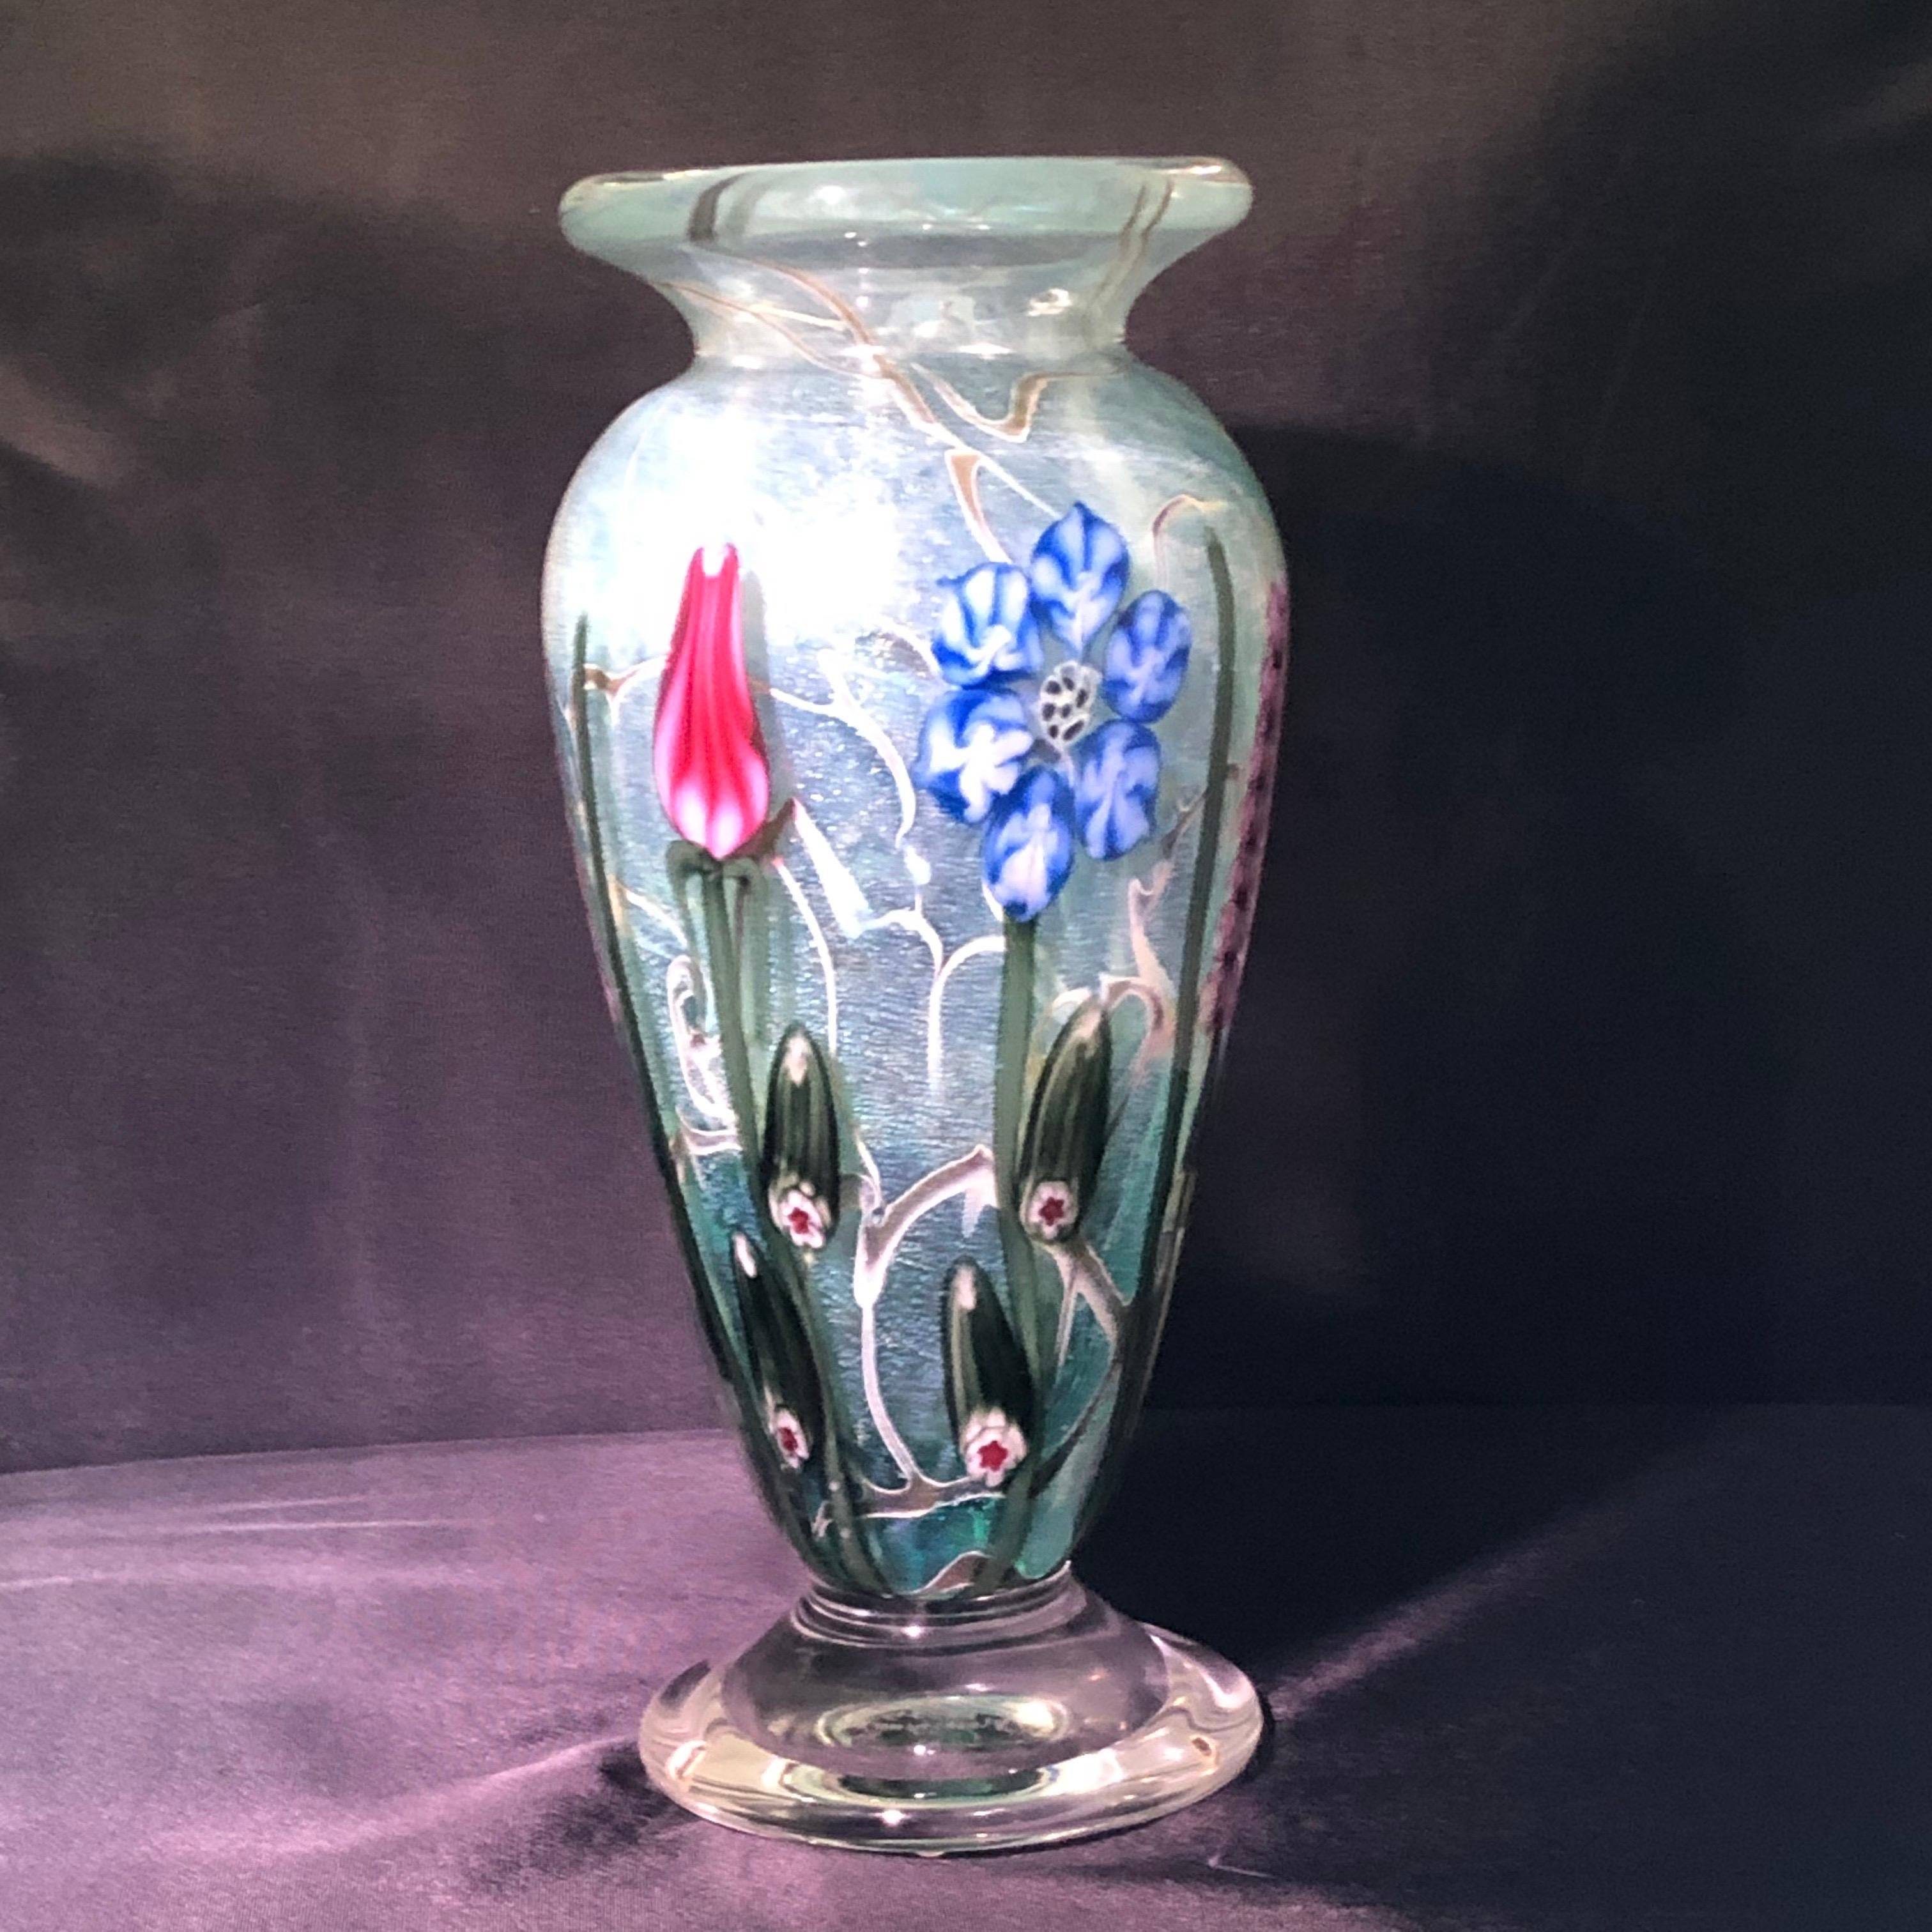 American Vandermark Art Glass Vase Signed by Vandermark, Doug Merritt and Stephen Smarr